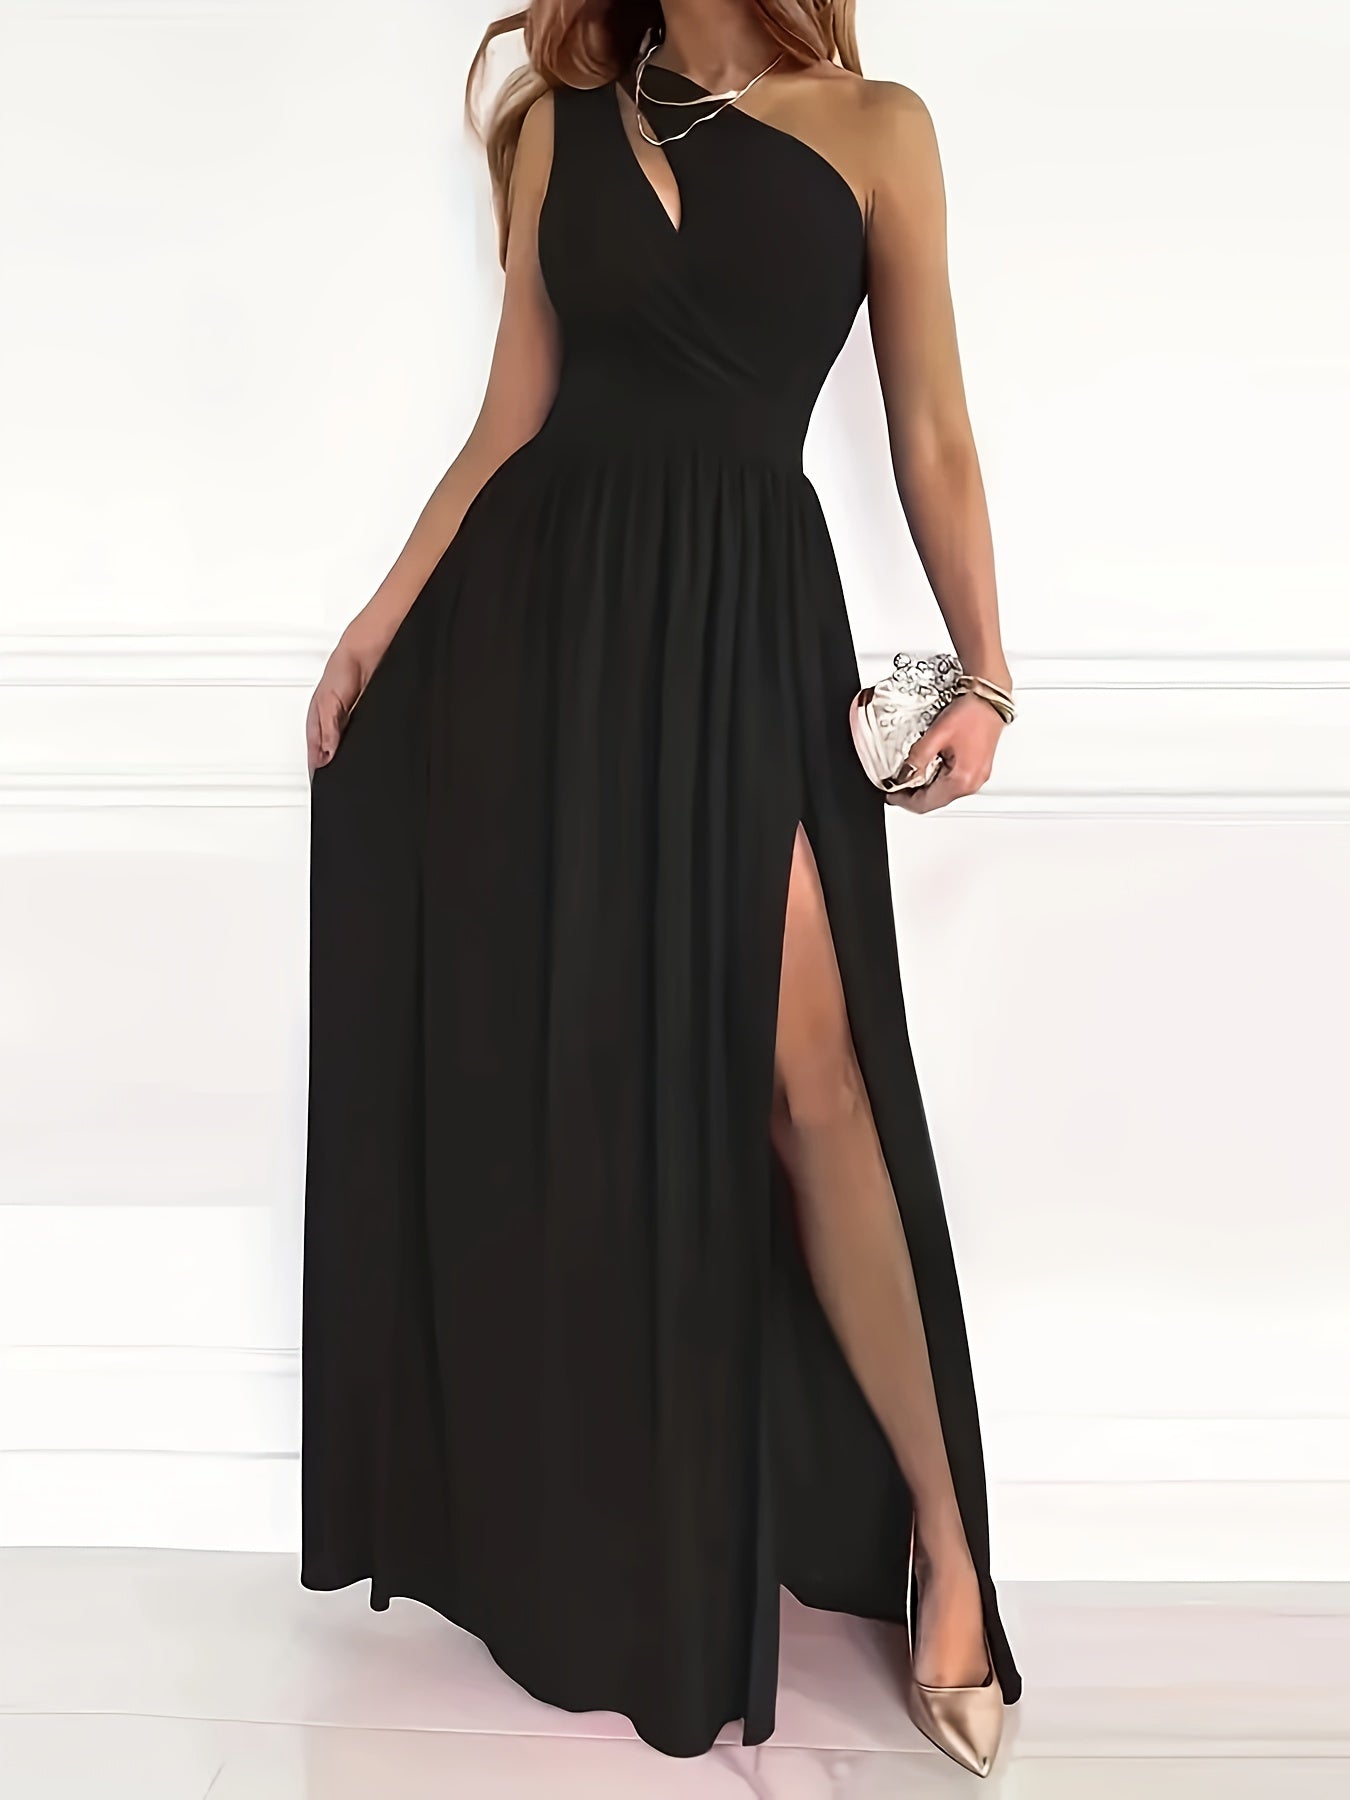 Solid One Shoulder Dress, Elegant Sleeveless Cut Out Split Dress, Women's Clothing